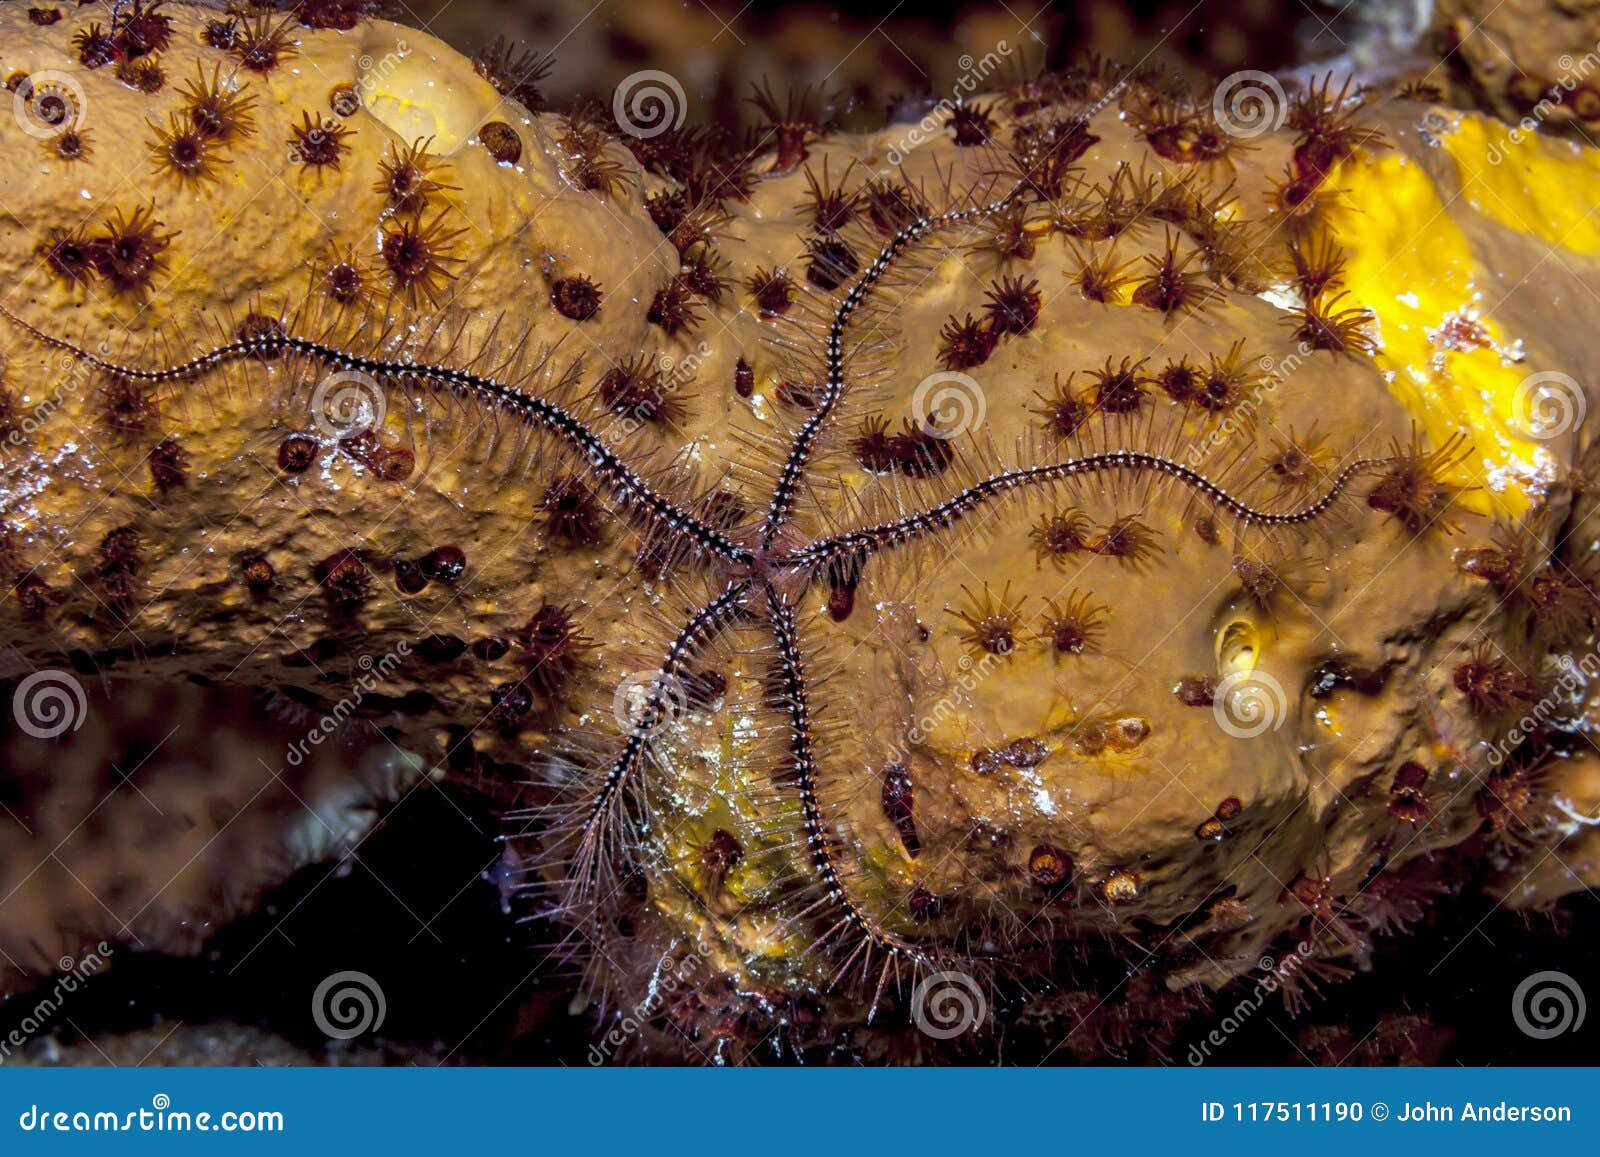 sponge brittle star,marine ,invertebrate